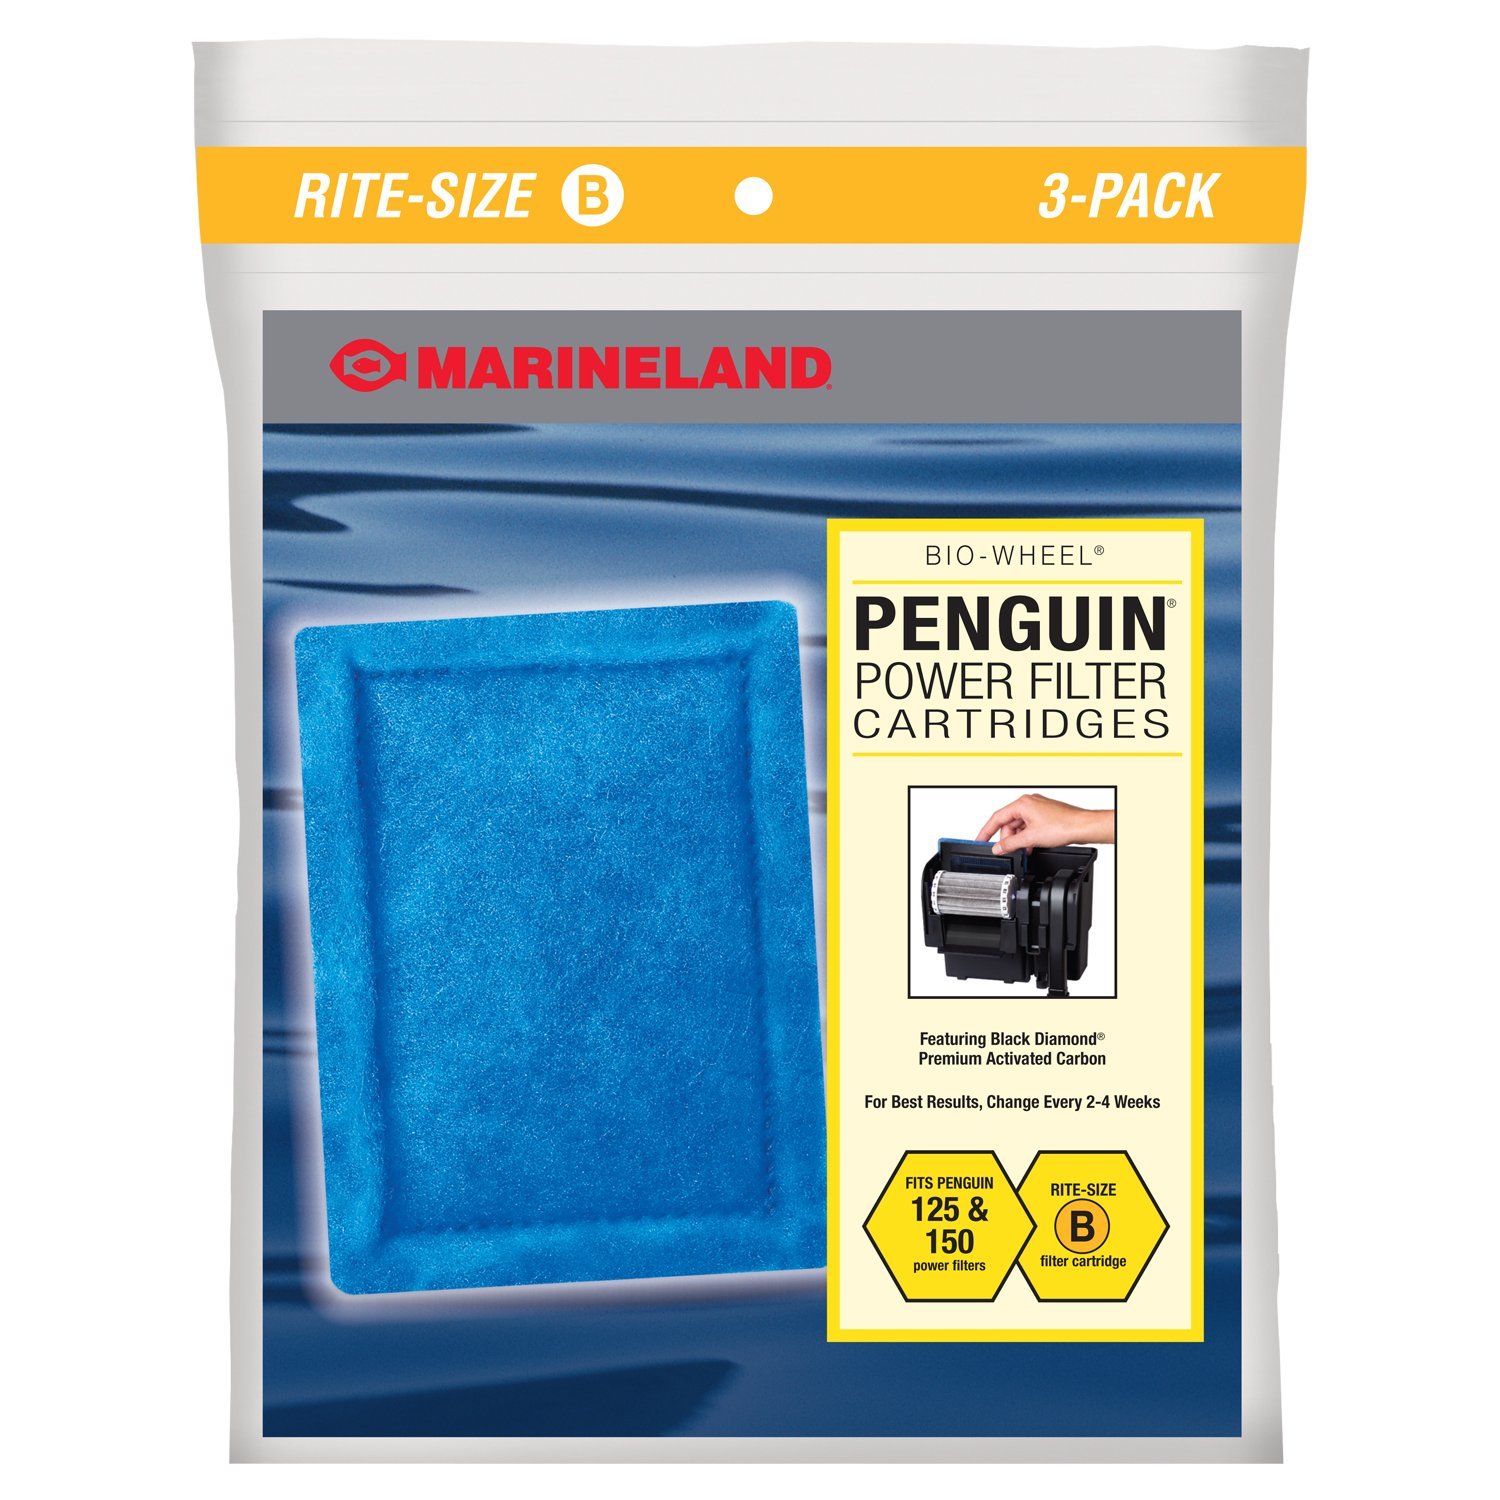 Marineland Rite-Size Cartridge Refills, B (3 Pack)